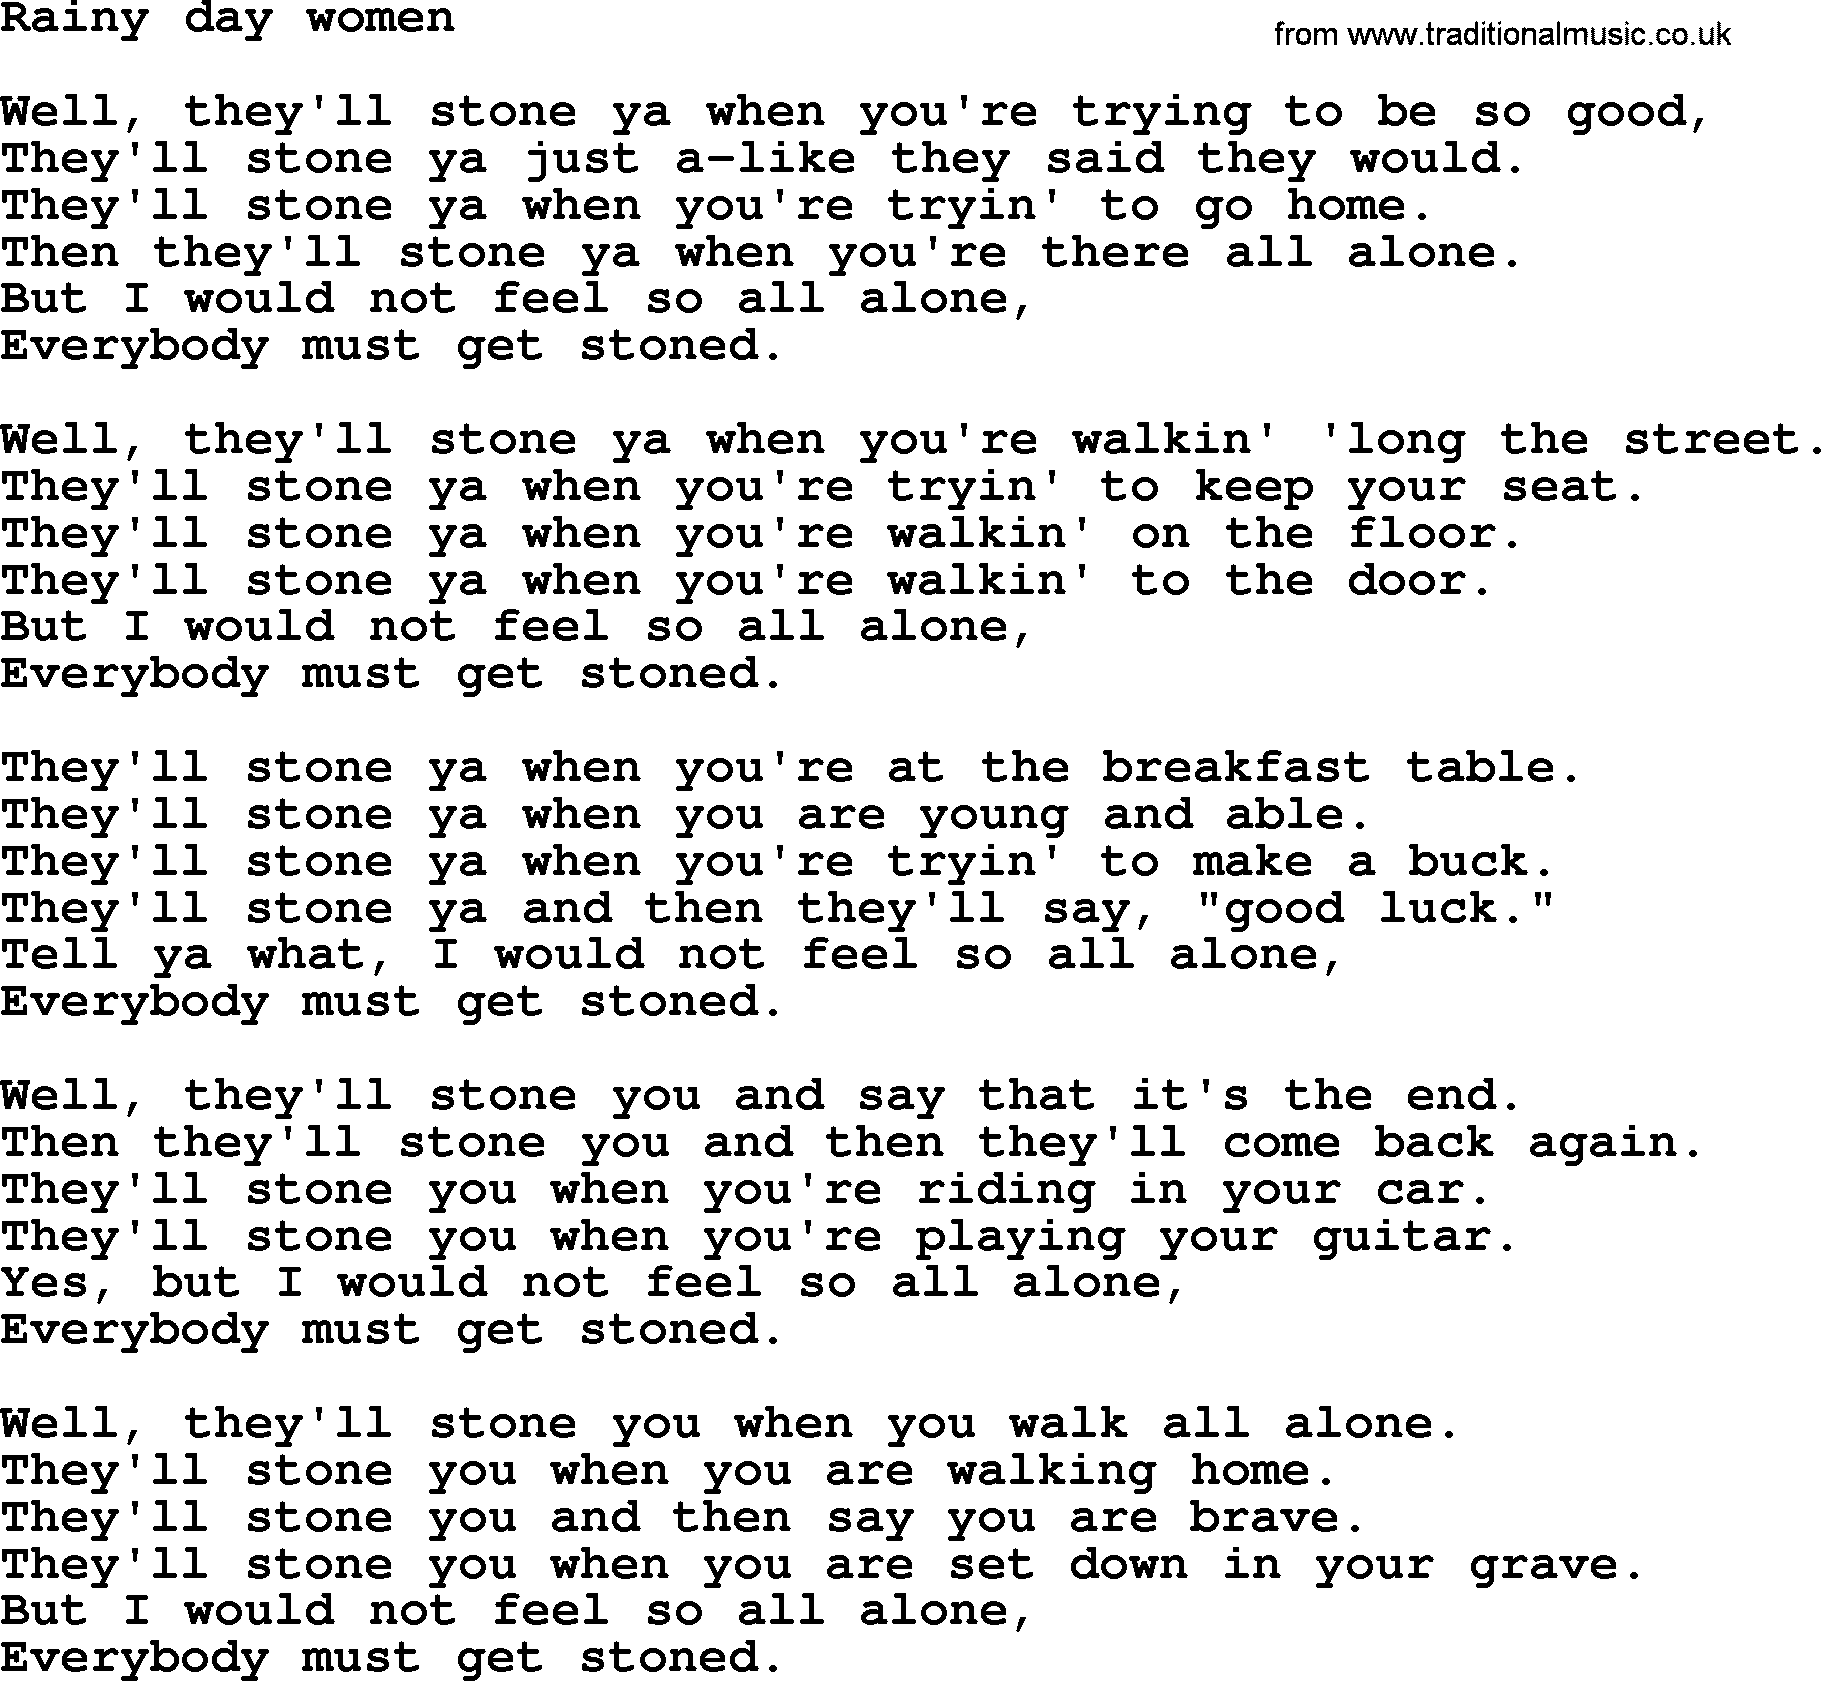 Bruce Springsteen song: Rainy Day Women lyrics